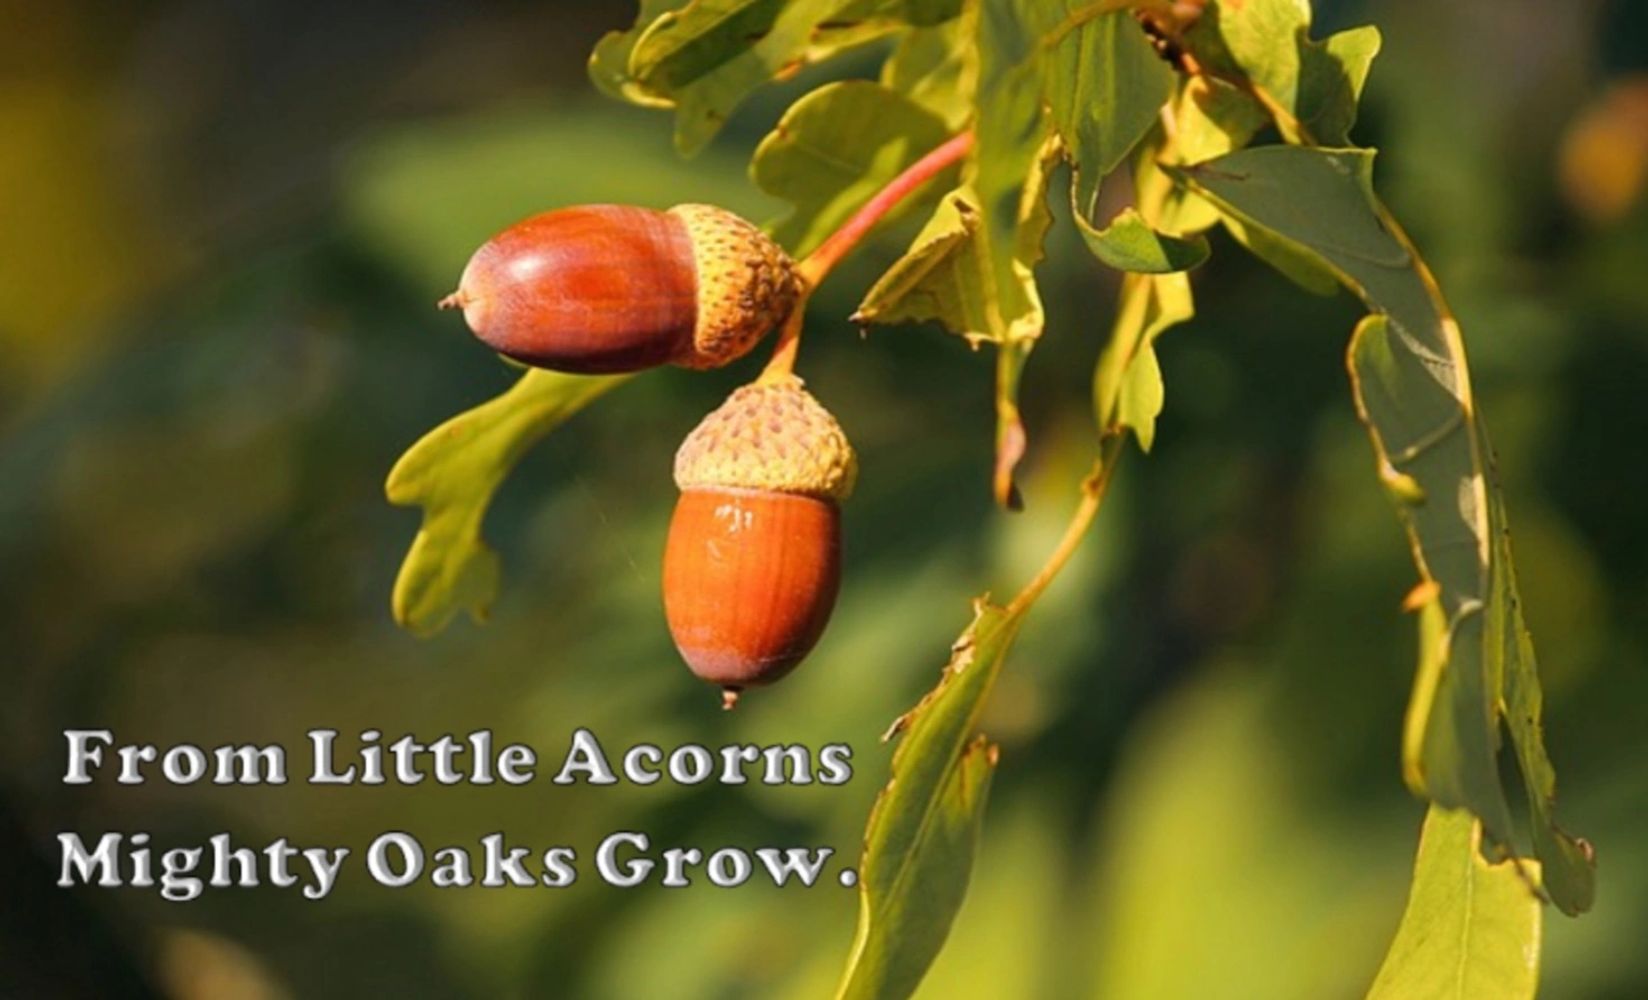 From Little Acorns Mighty Oaks Grow.